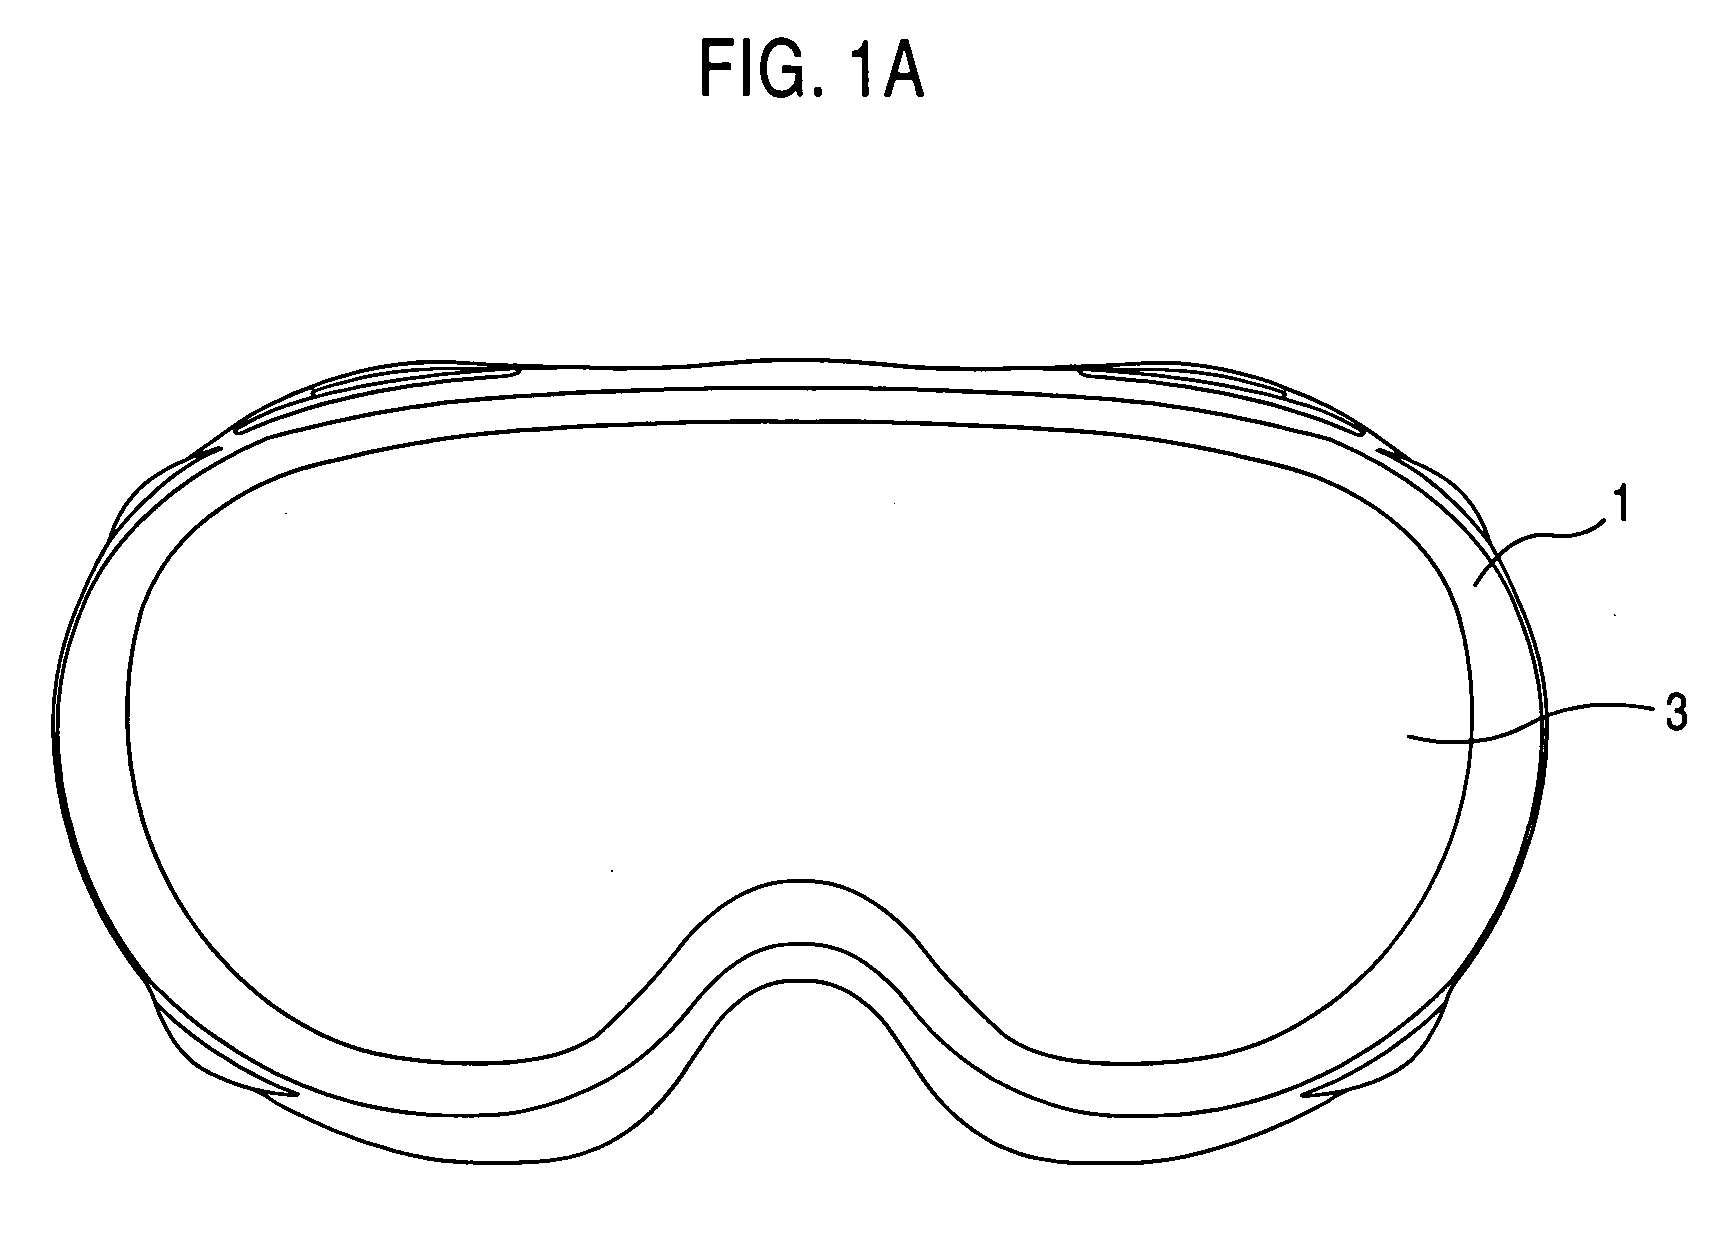 Goggle lens interchange system